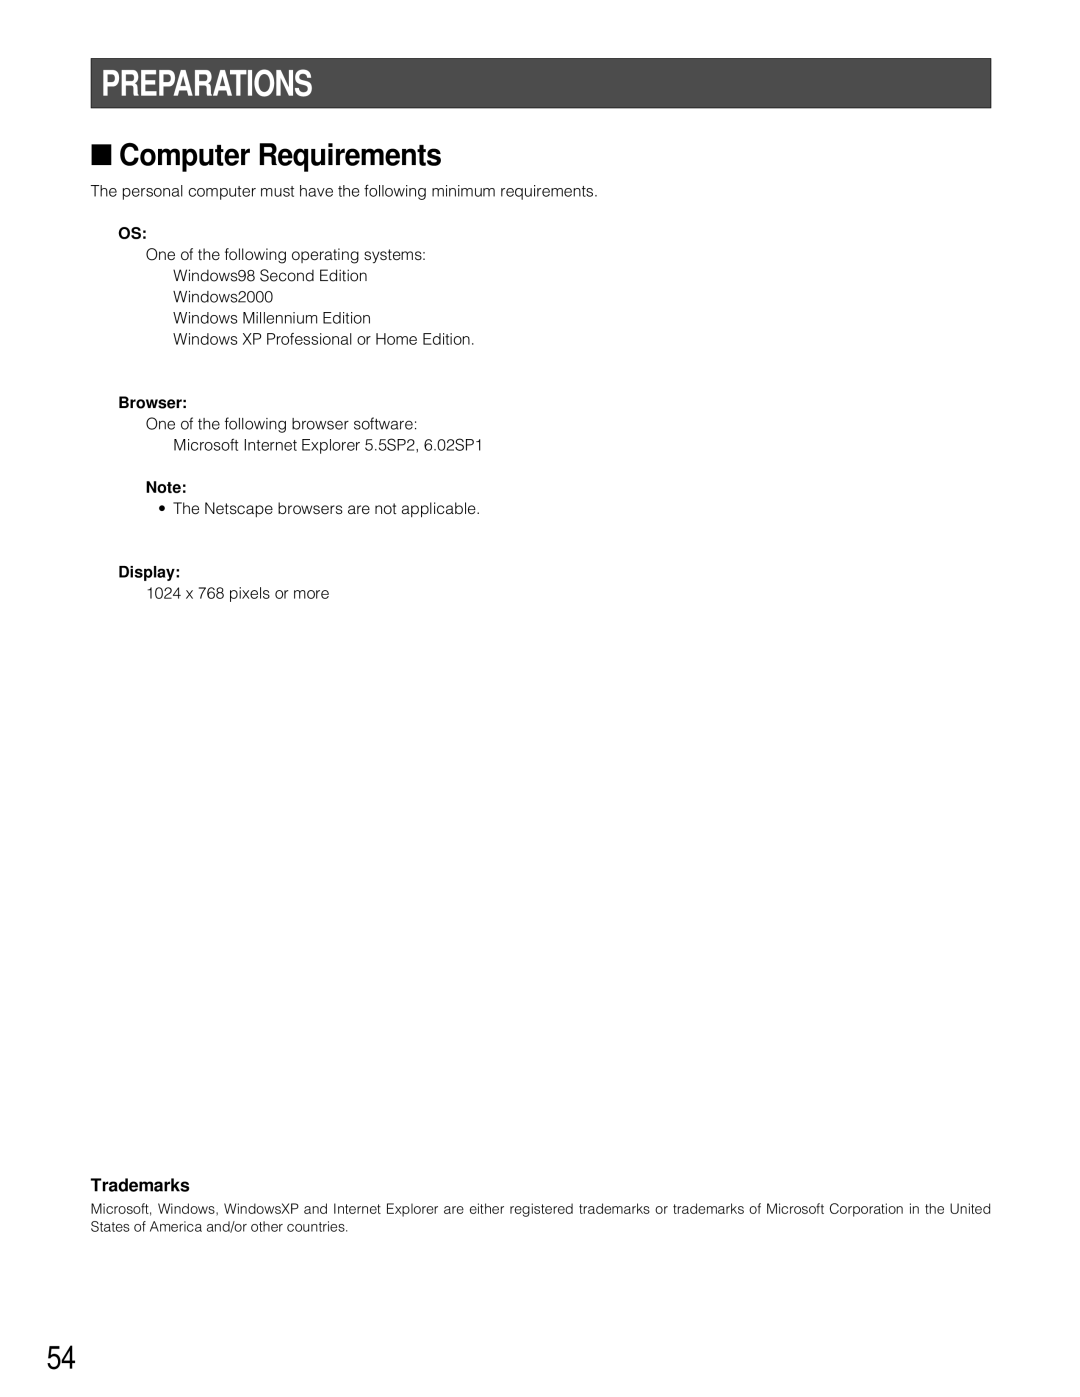 Panasonic WJ-HD200 manual Preparations, Computer Requirements, Trademarks 